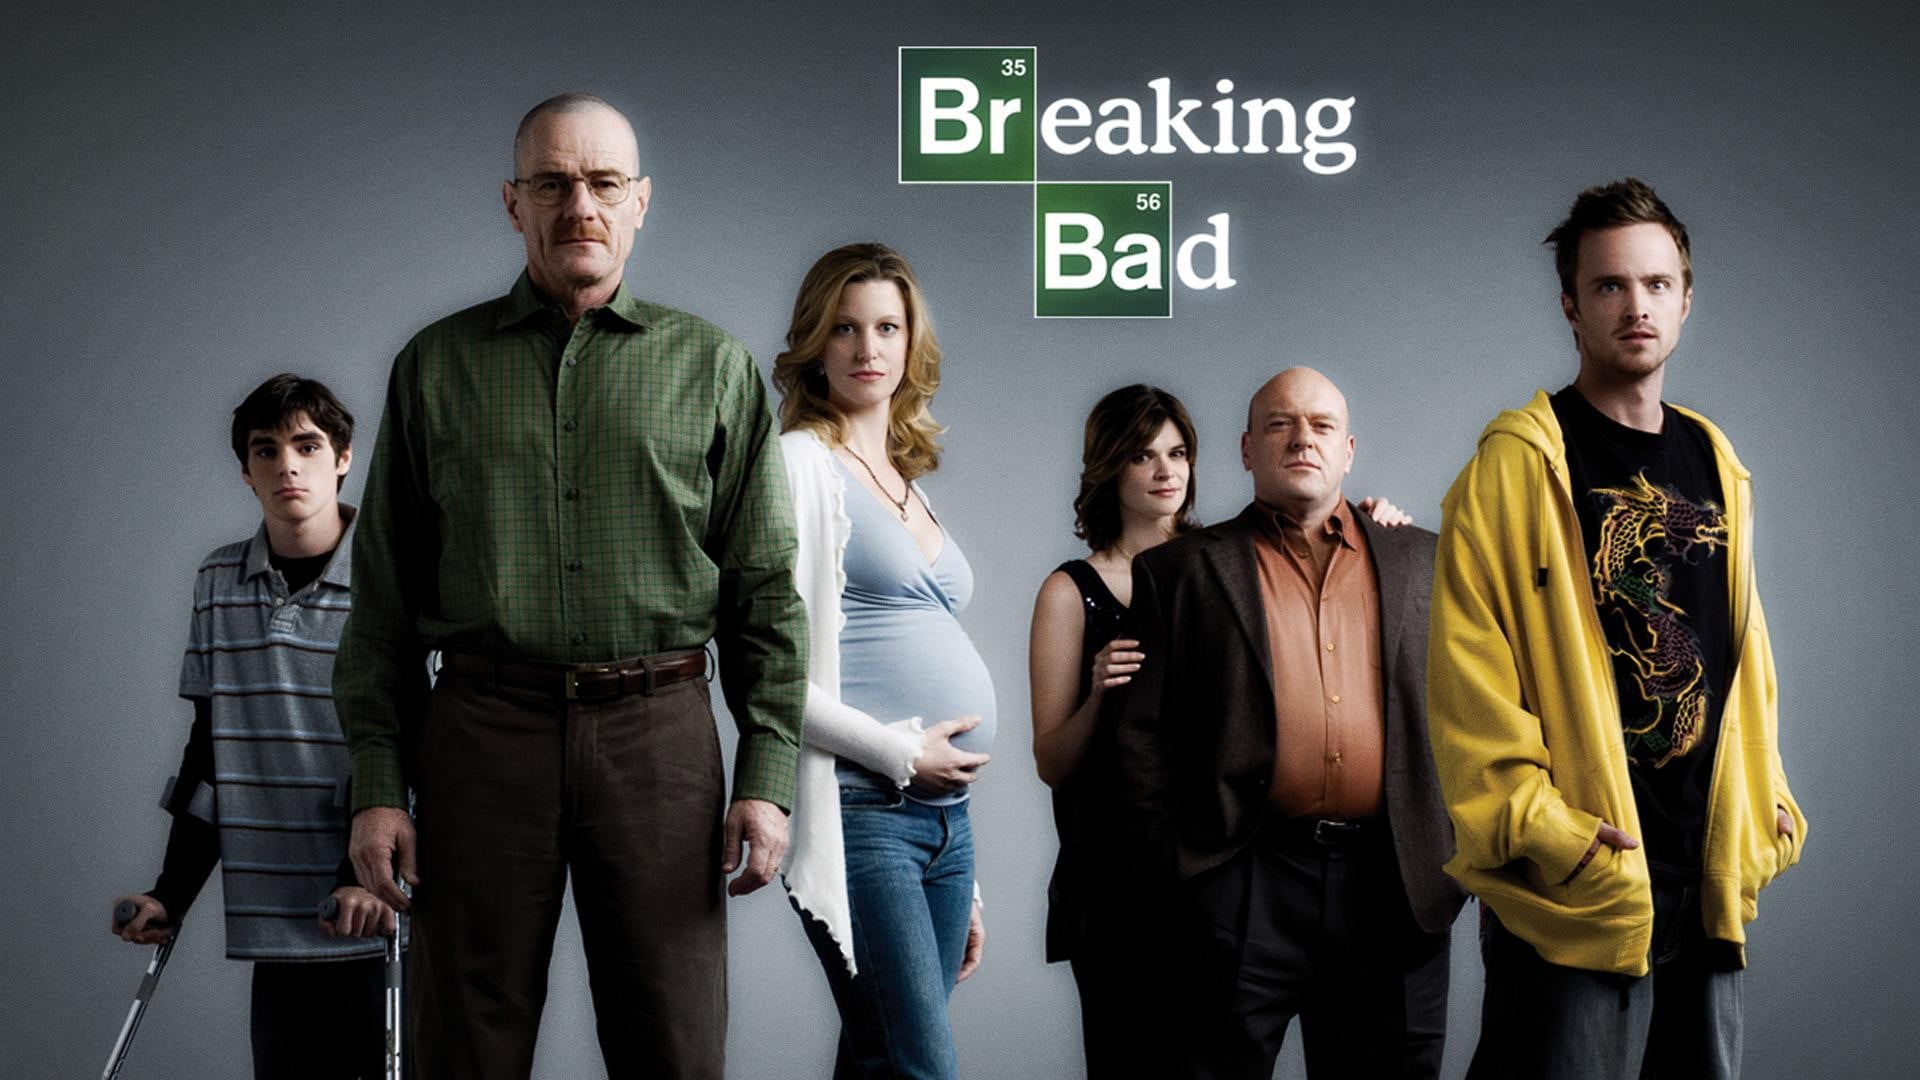 Breaking Bad TV show digital wallpaper, Breaking Bad, Walter White, Heisenberg, Jesse Pinkman